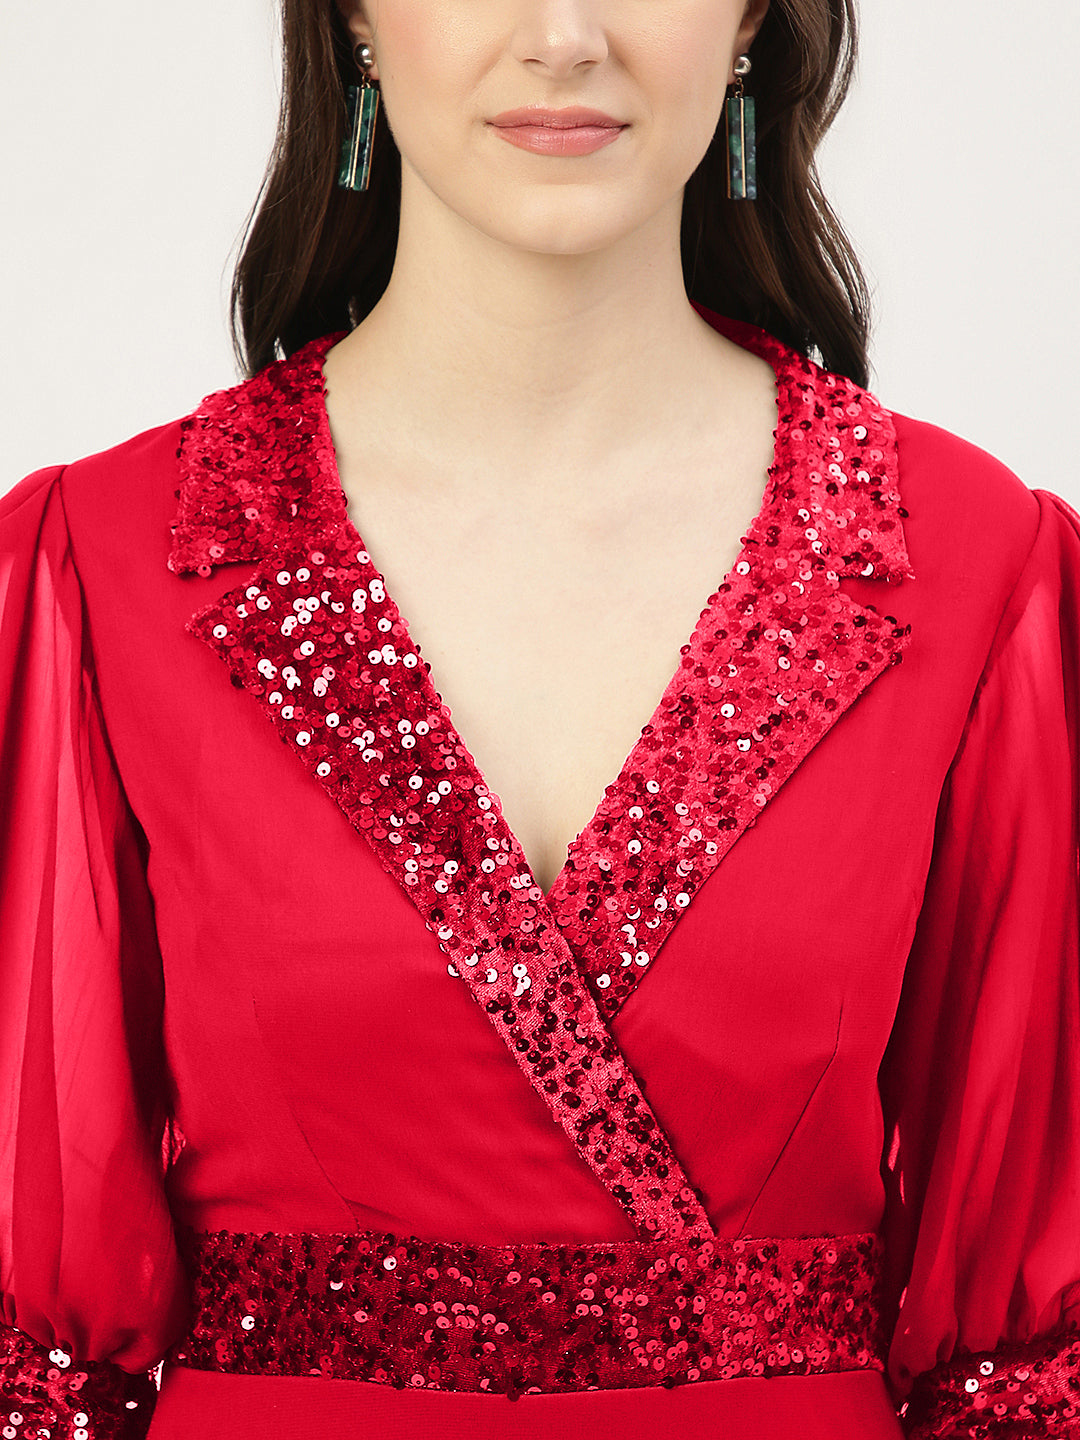 Red Embellished Slit Long Dress with 3/4 Sleeves